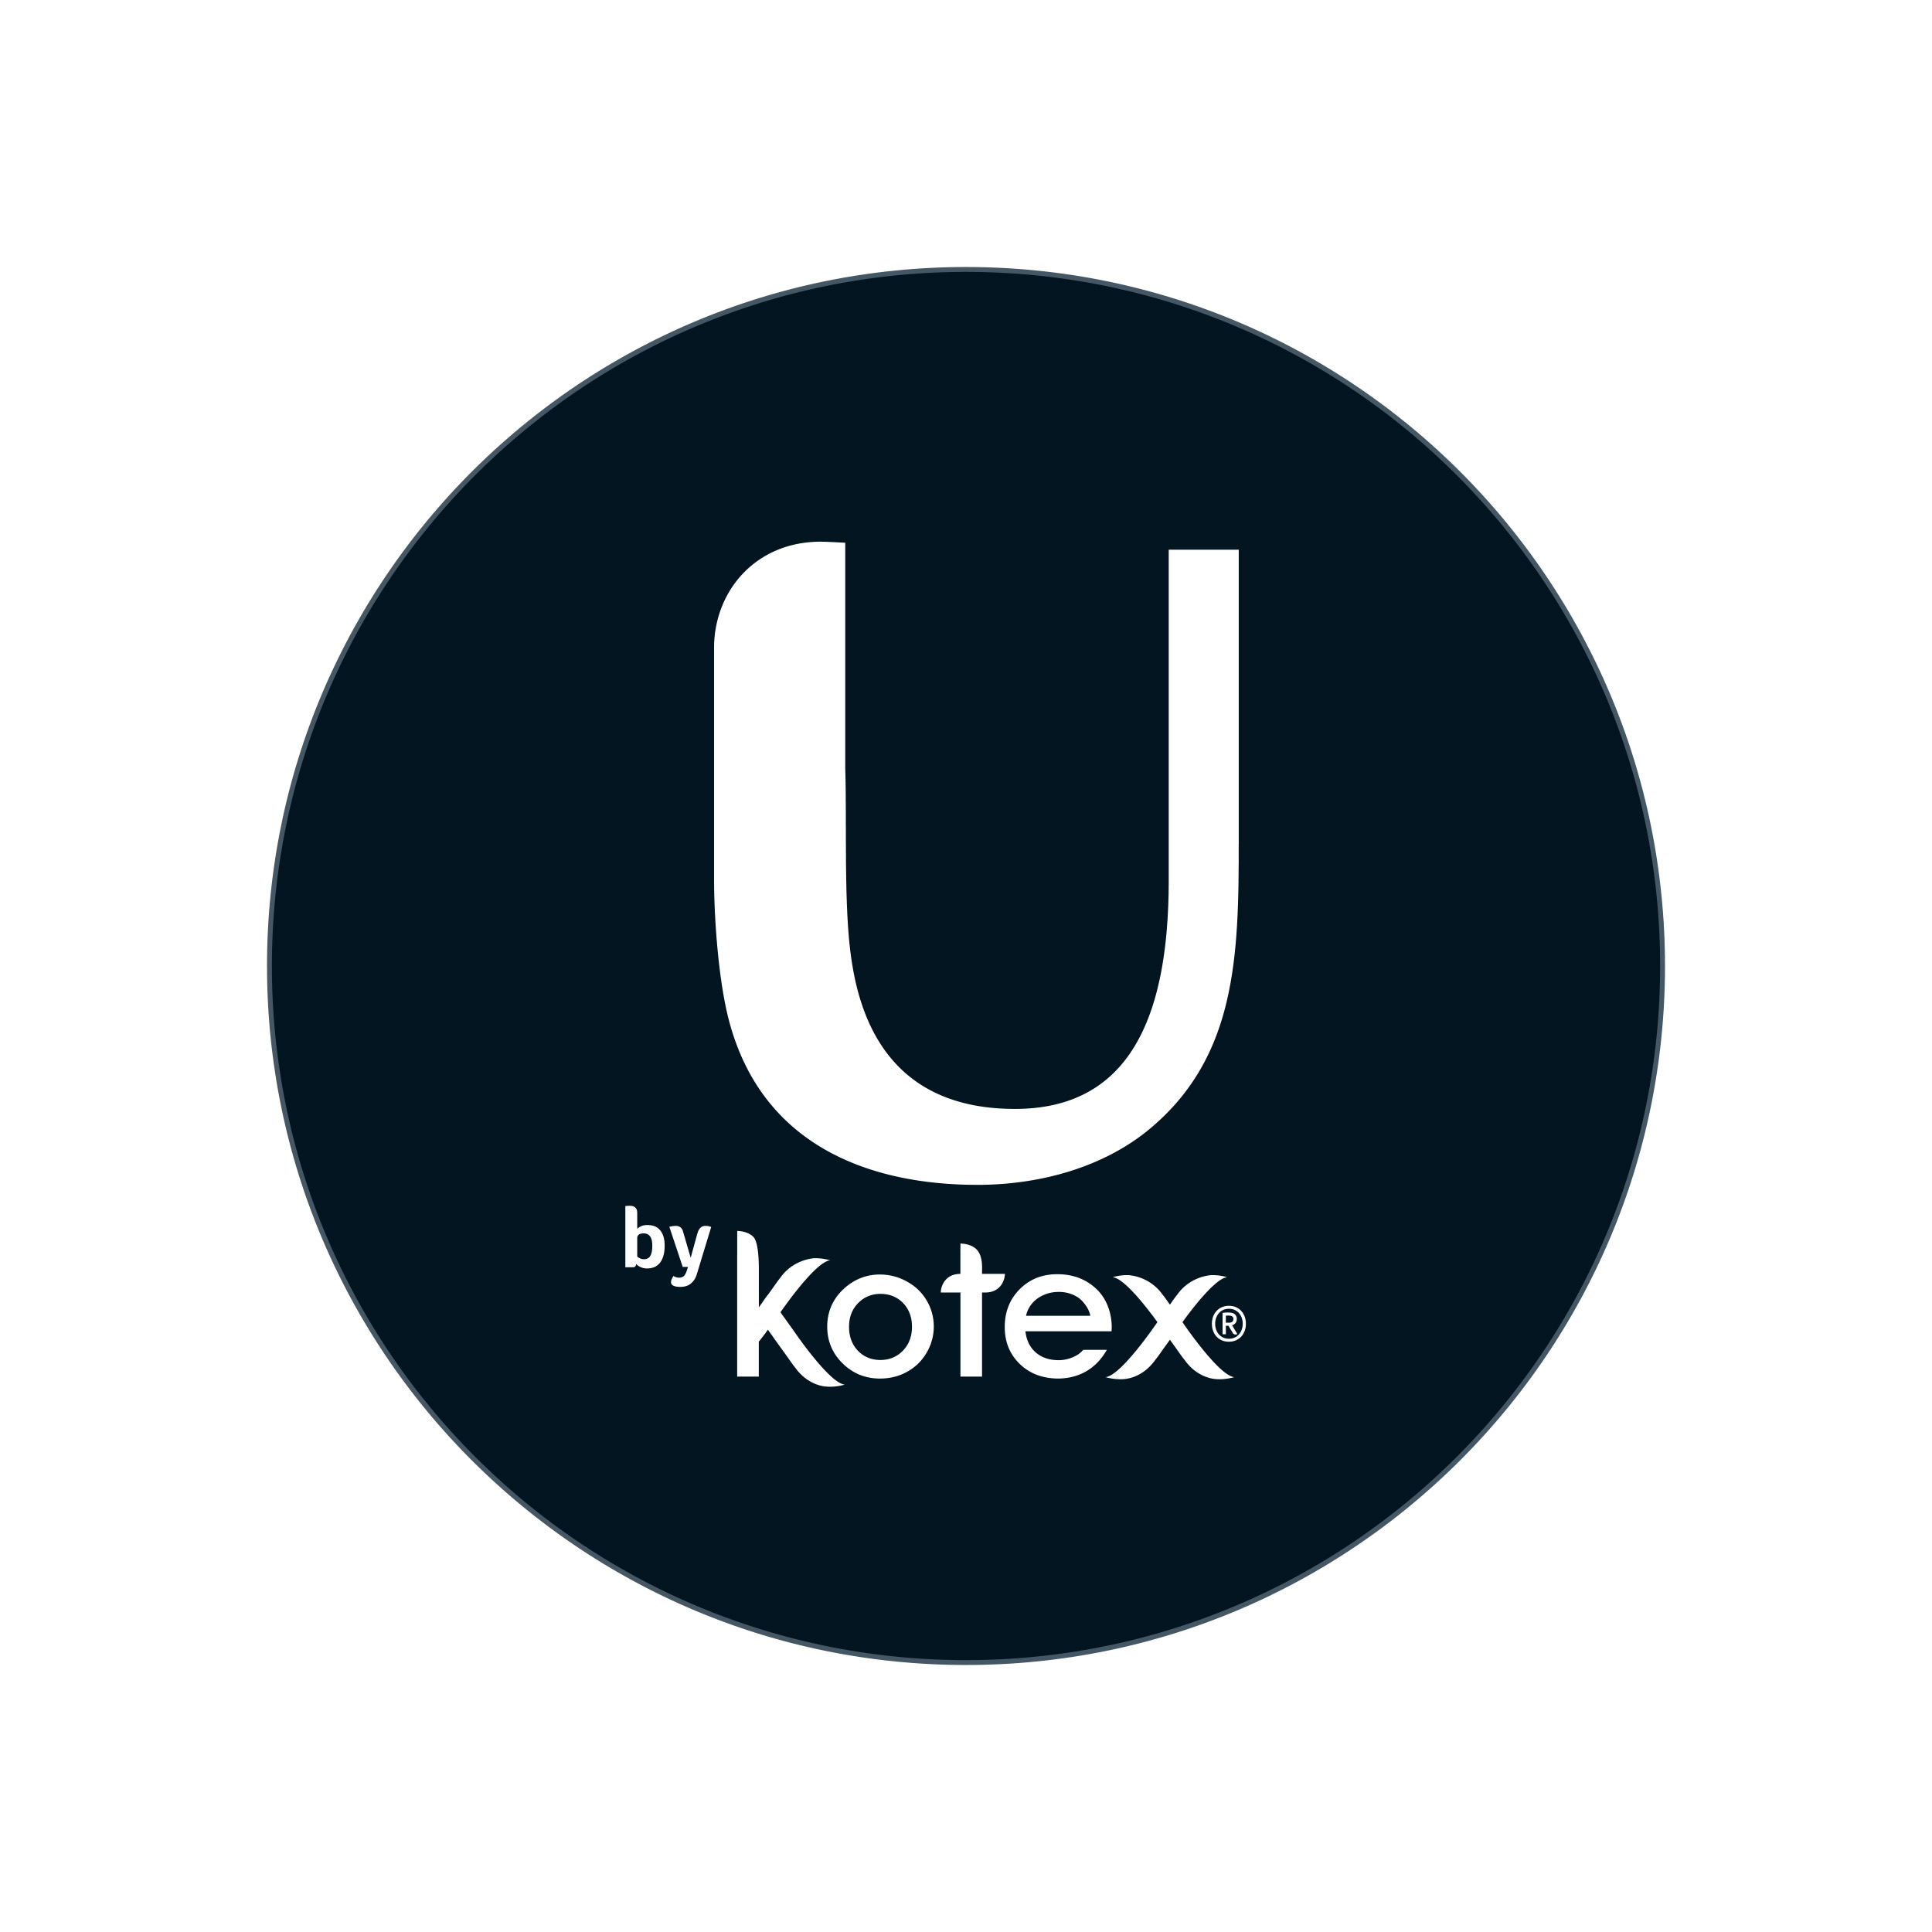 60196-U-by-Kotex-logo-original.jpg